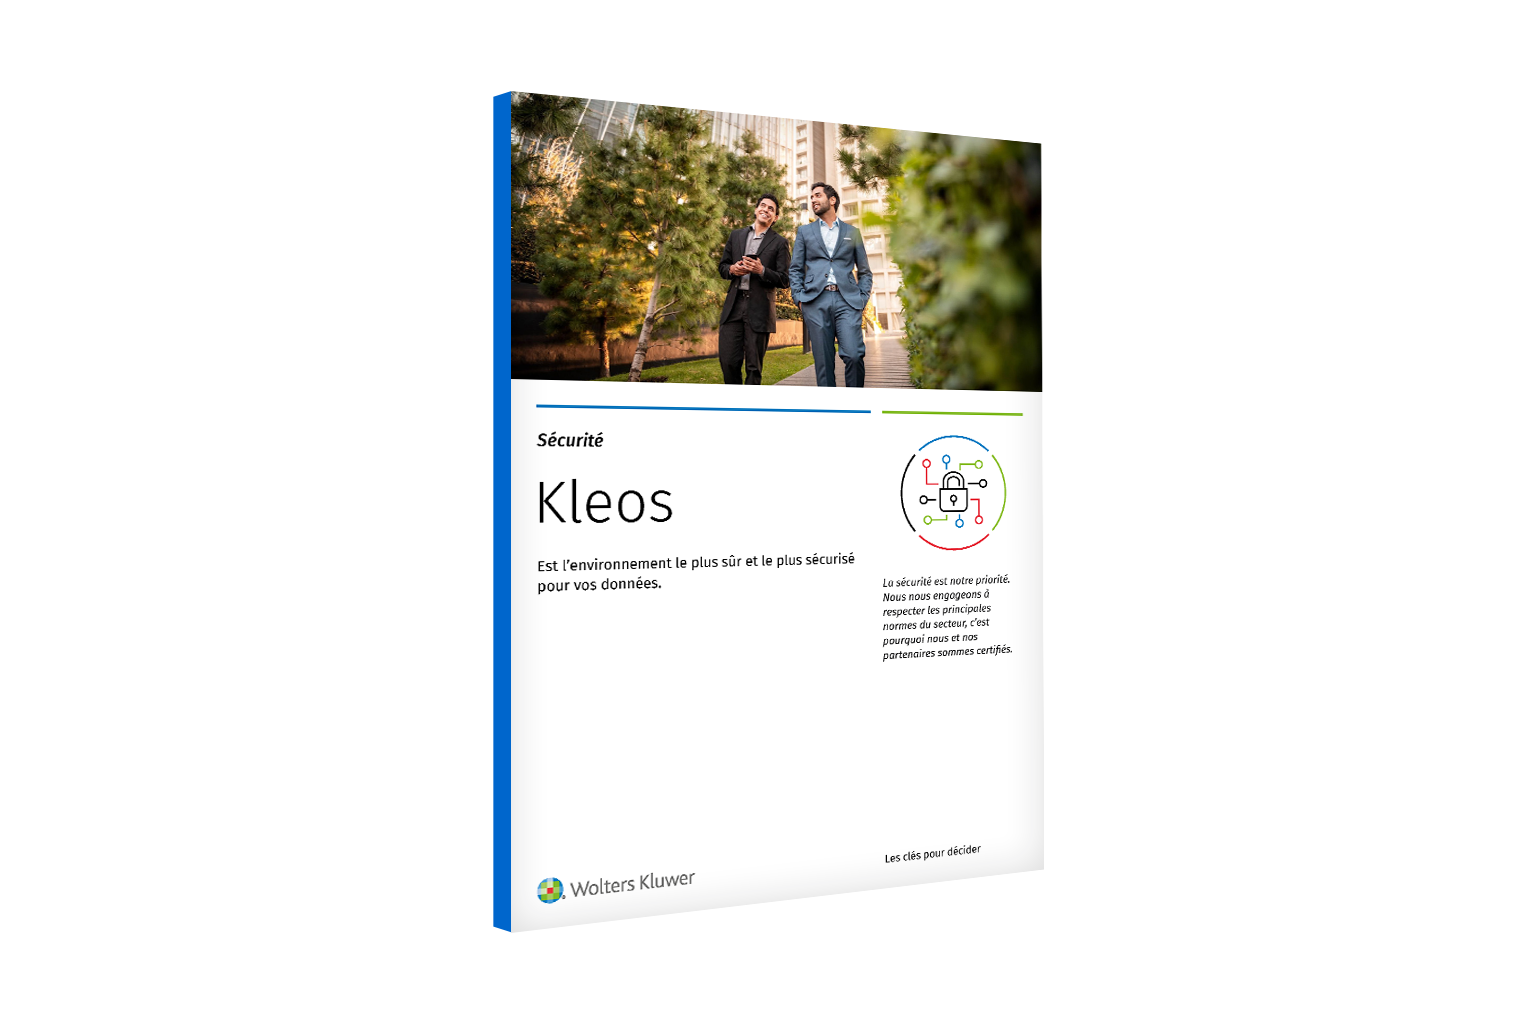 Kleos-Security-FR-1536x1024